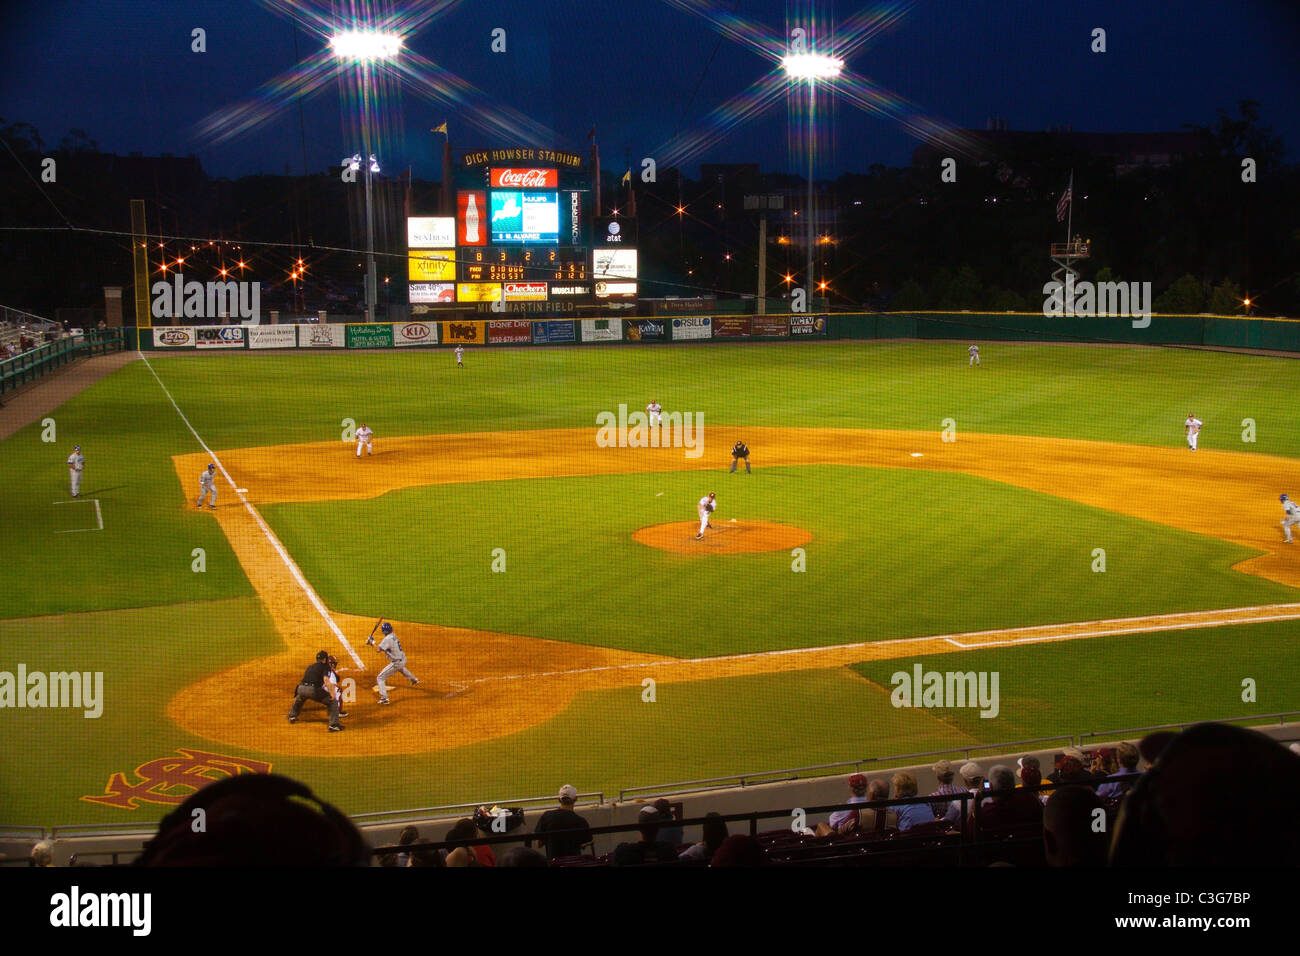 Evening baseball at Florida State University, Tallahassee, Florida, USA Stock Photo